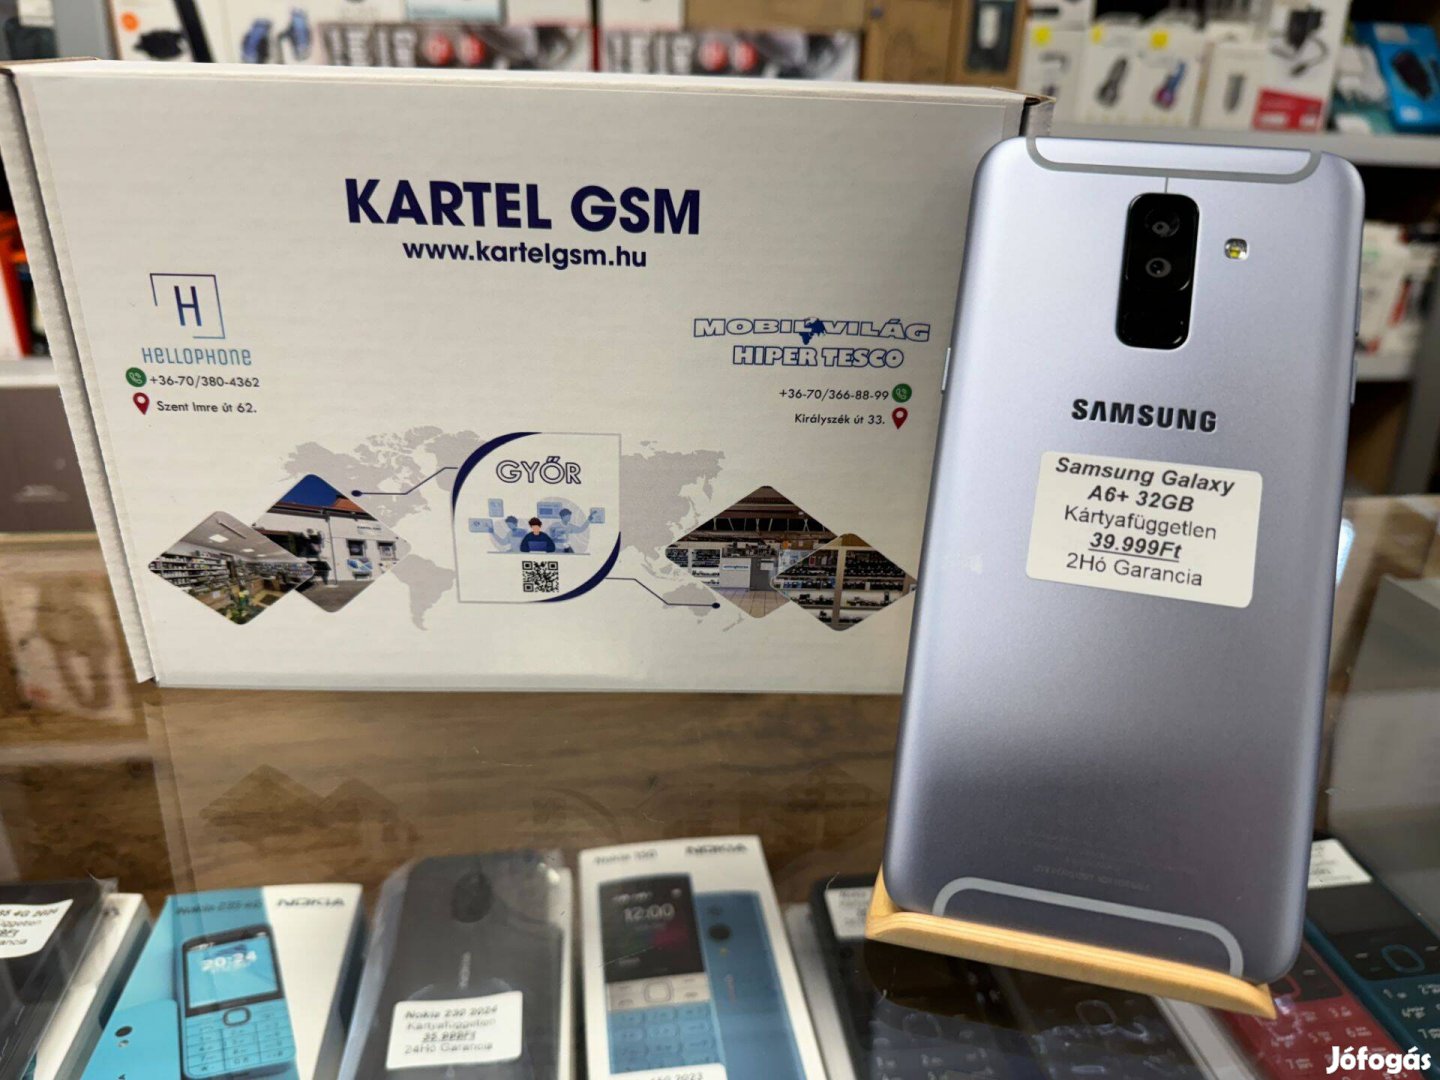 Samsung Galaxy A6+ 32GB Kártyafüggetlen 2Hó Garancia